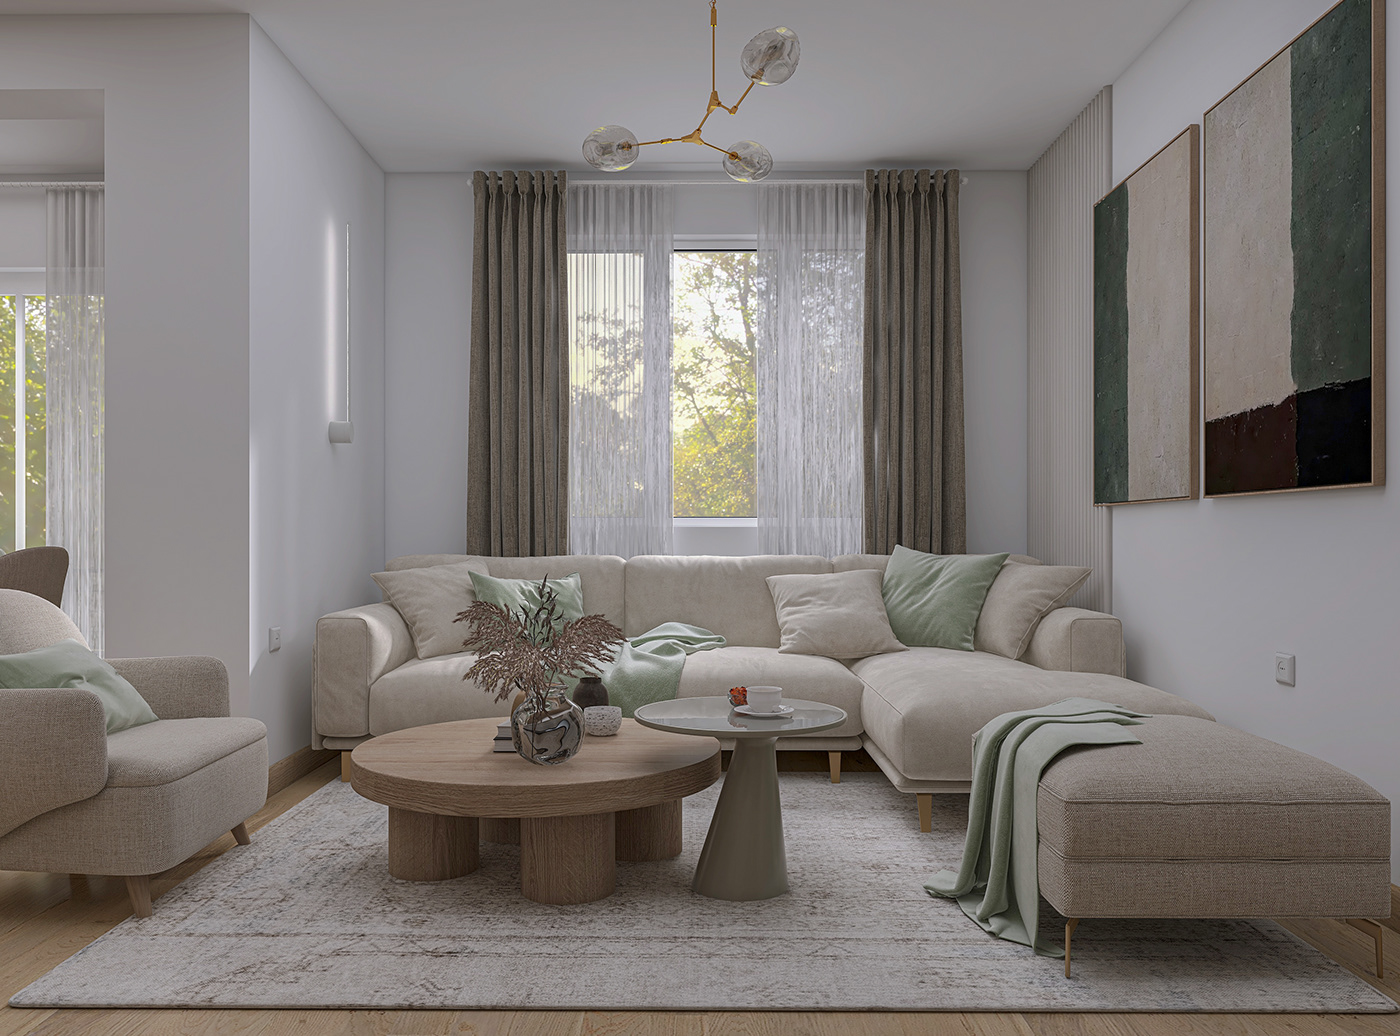 Sink modern visualization architecture interior design  Render 3D corona living room neutral colors